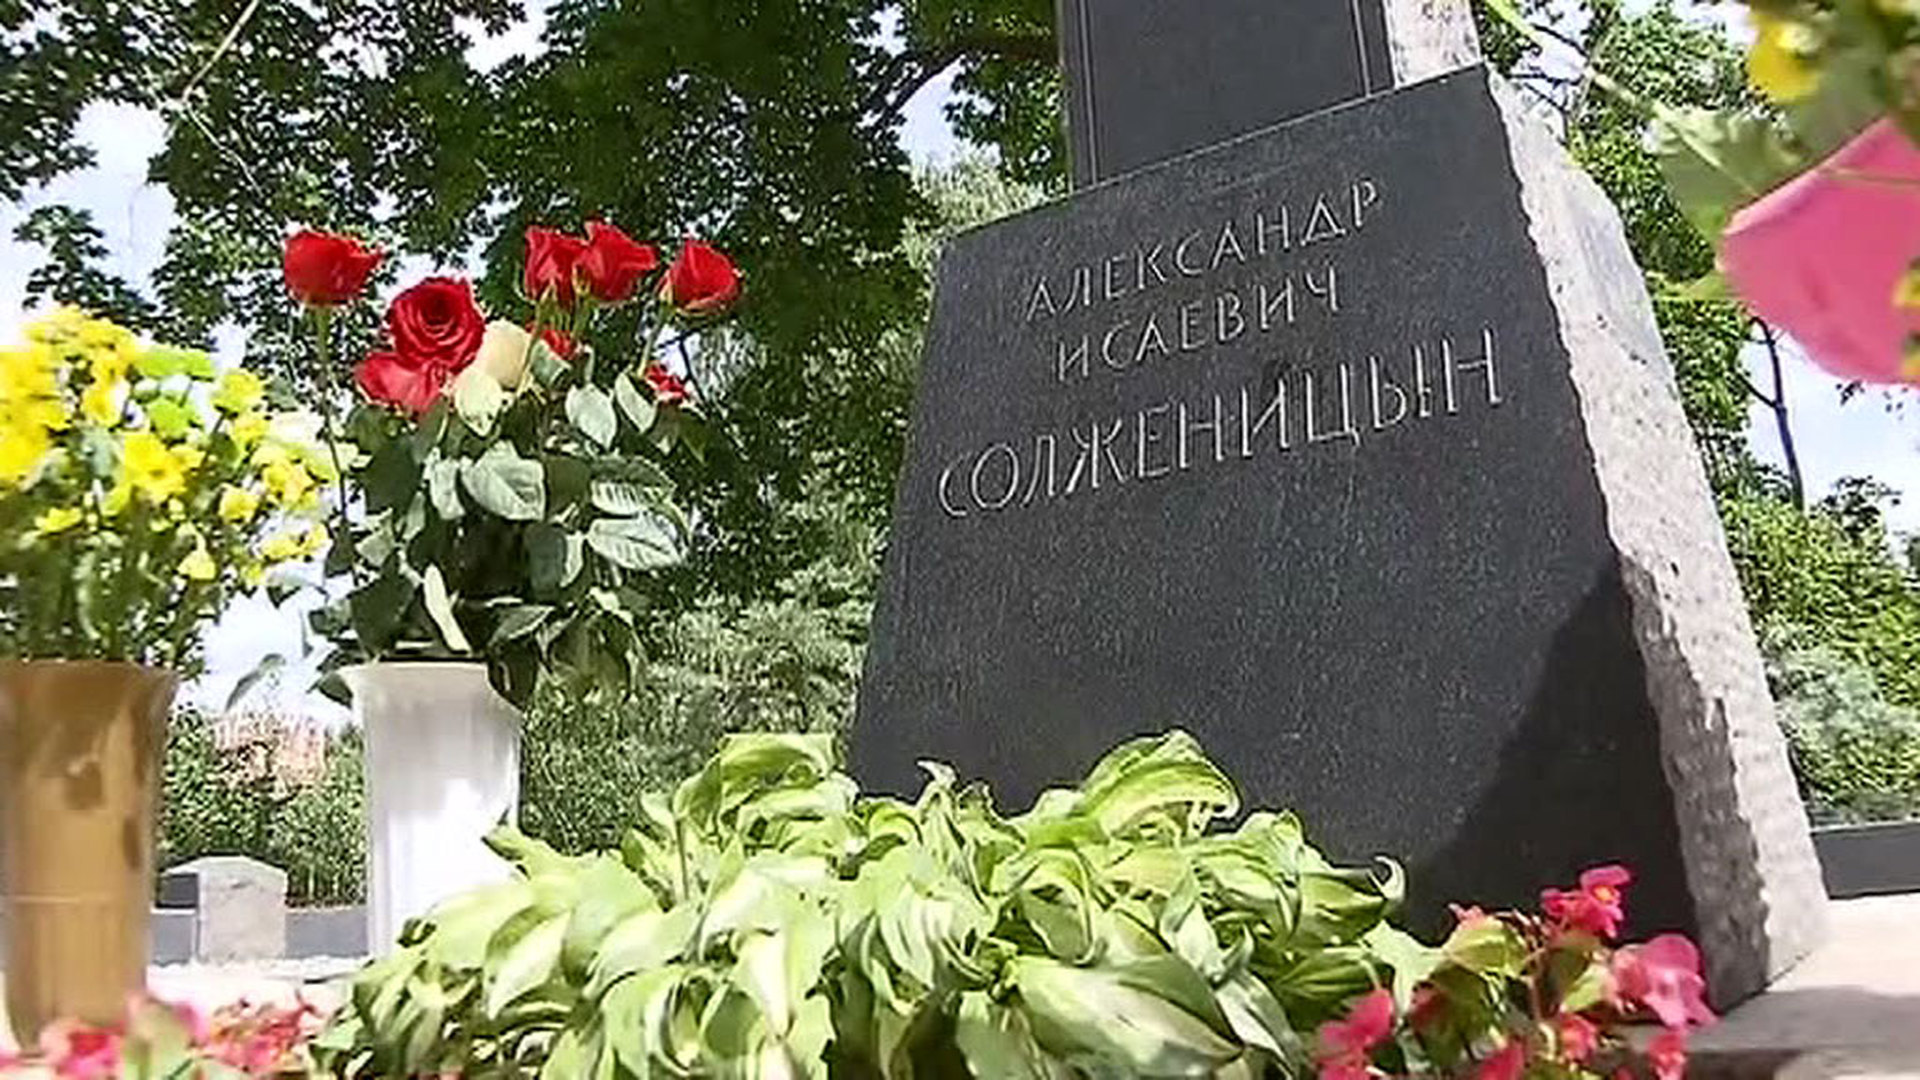 Когда умер солженицын. Могила Солженицына на Донском кладбище.